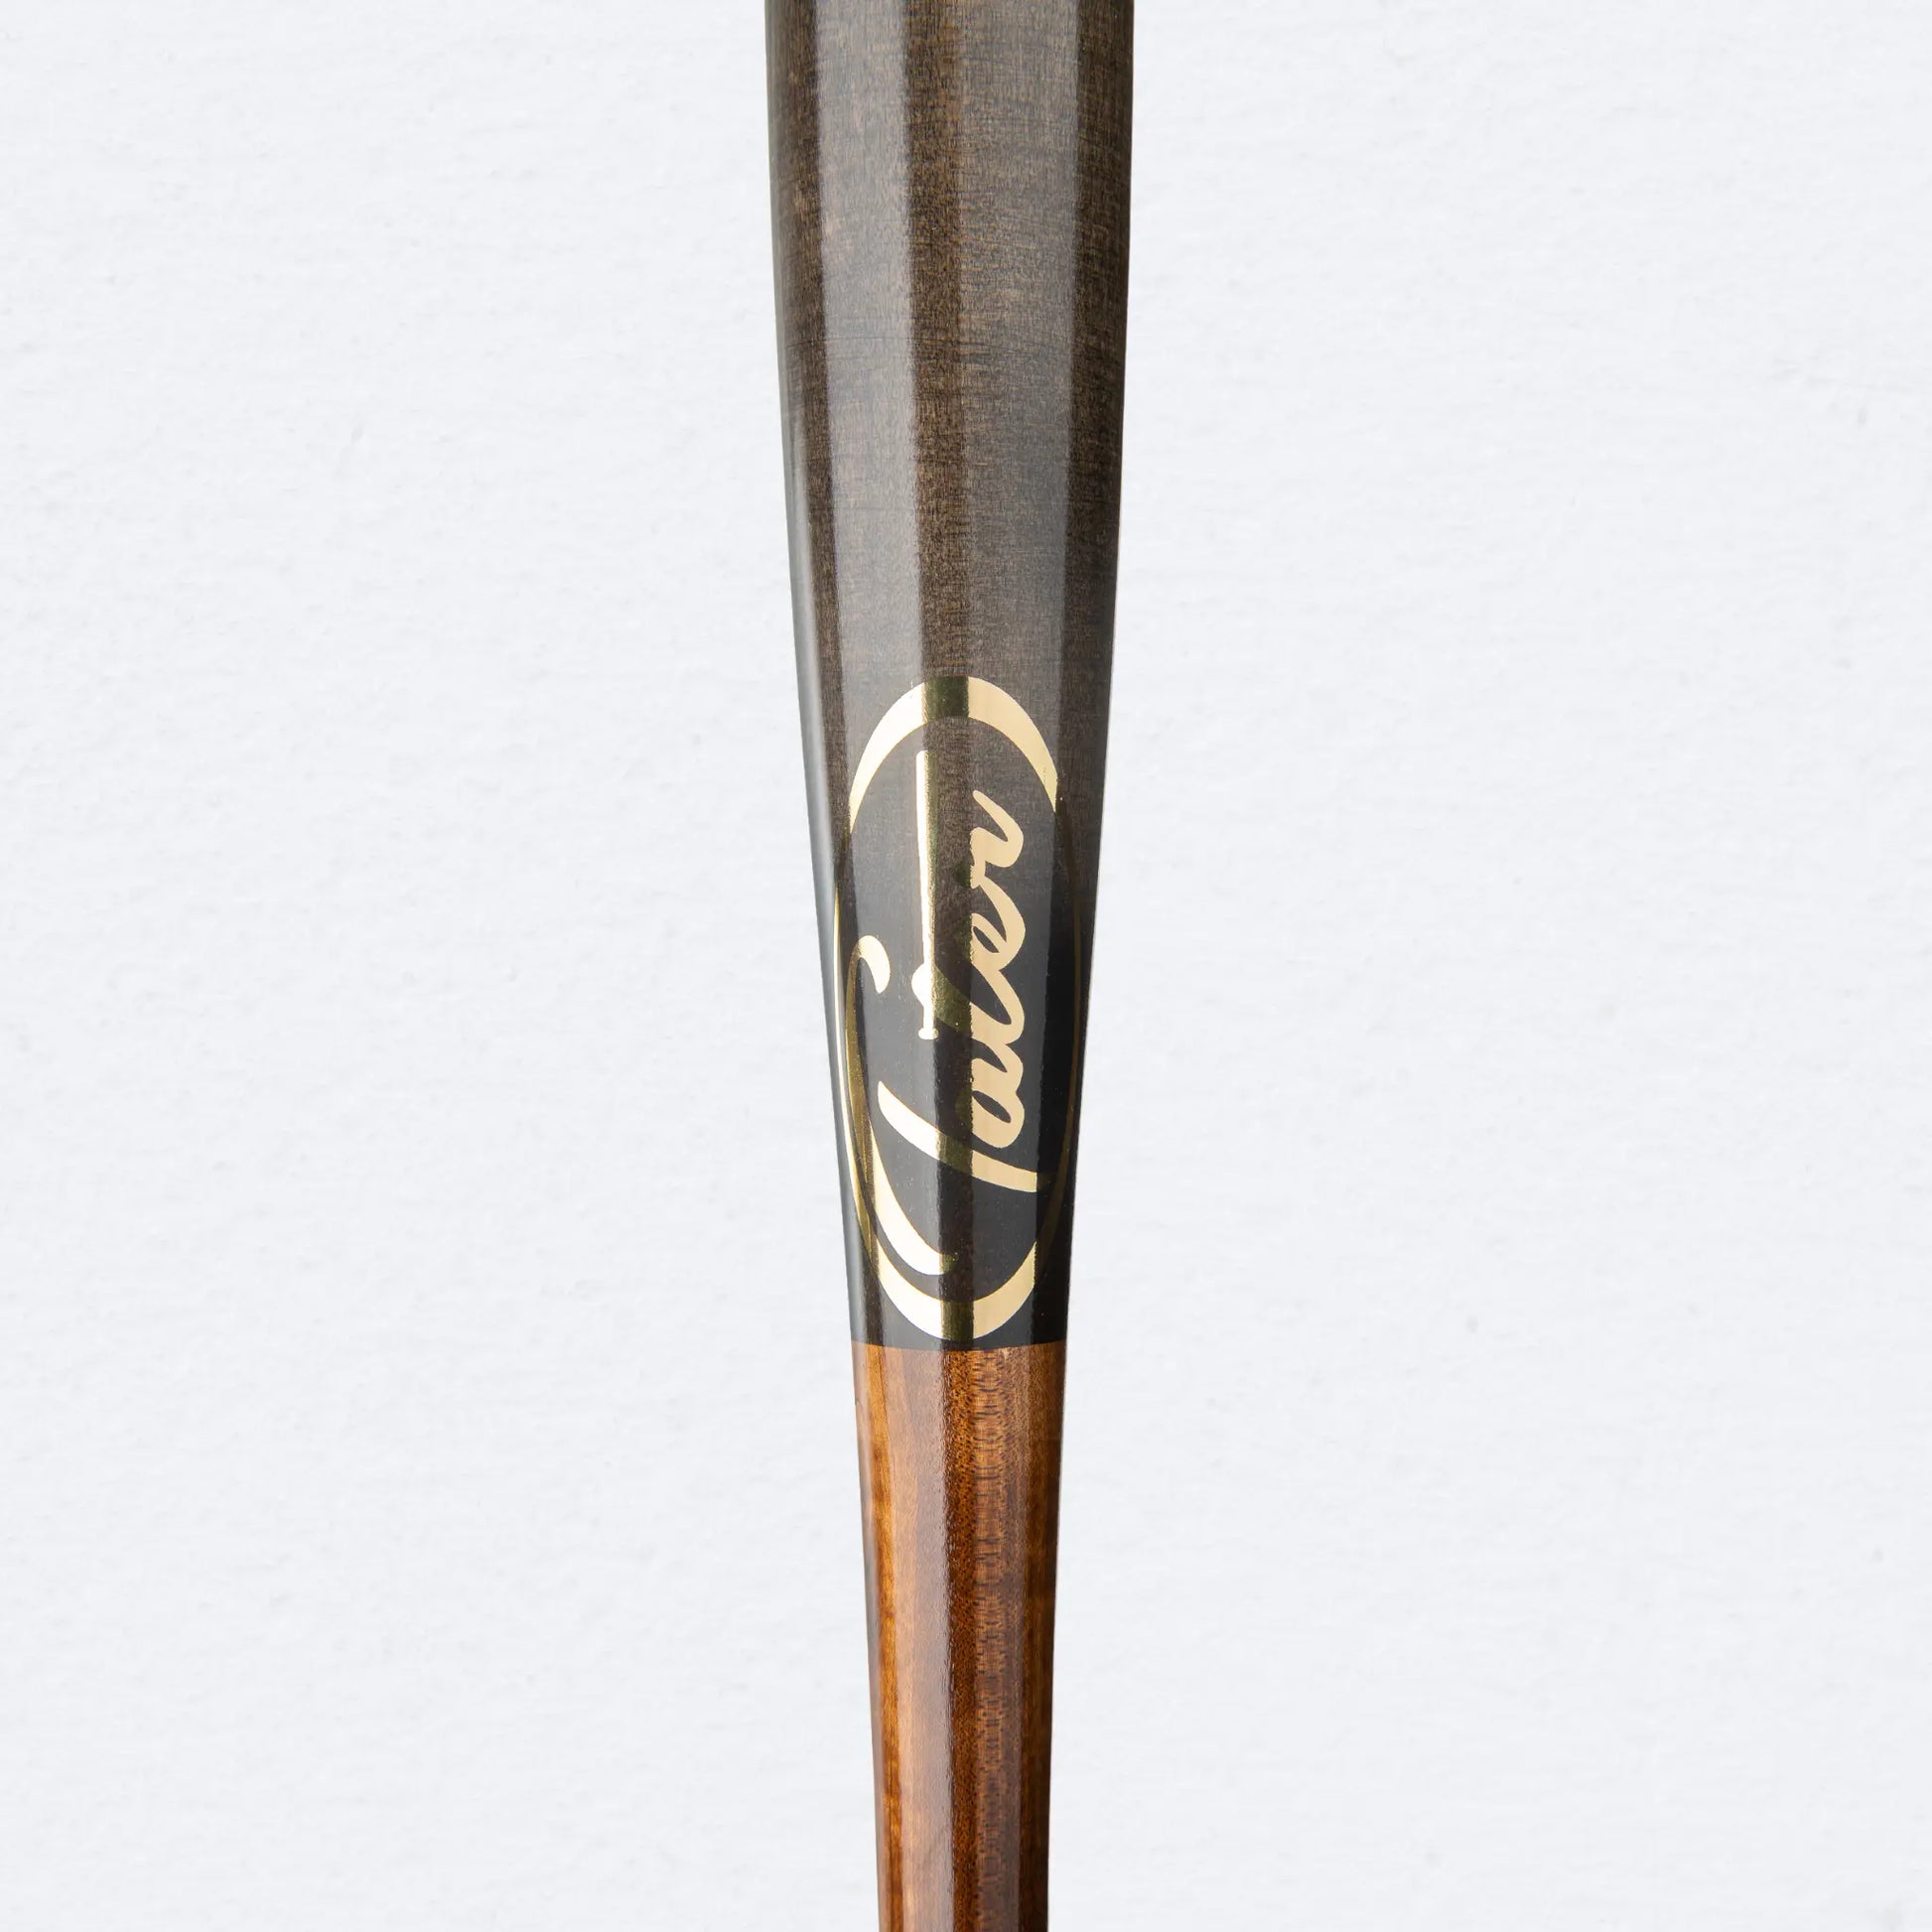 Close-up of Tater Baseball's high-quality maple wood bat, showcasing the brand logo and sleek wood grain finish.